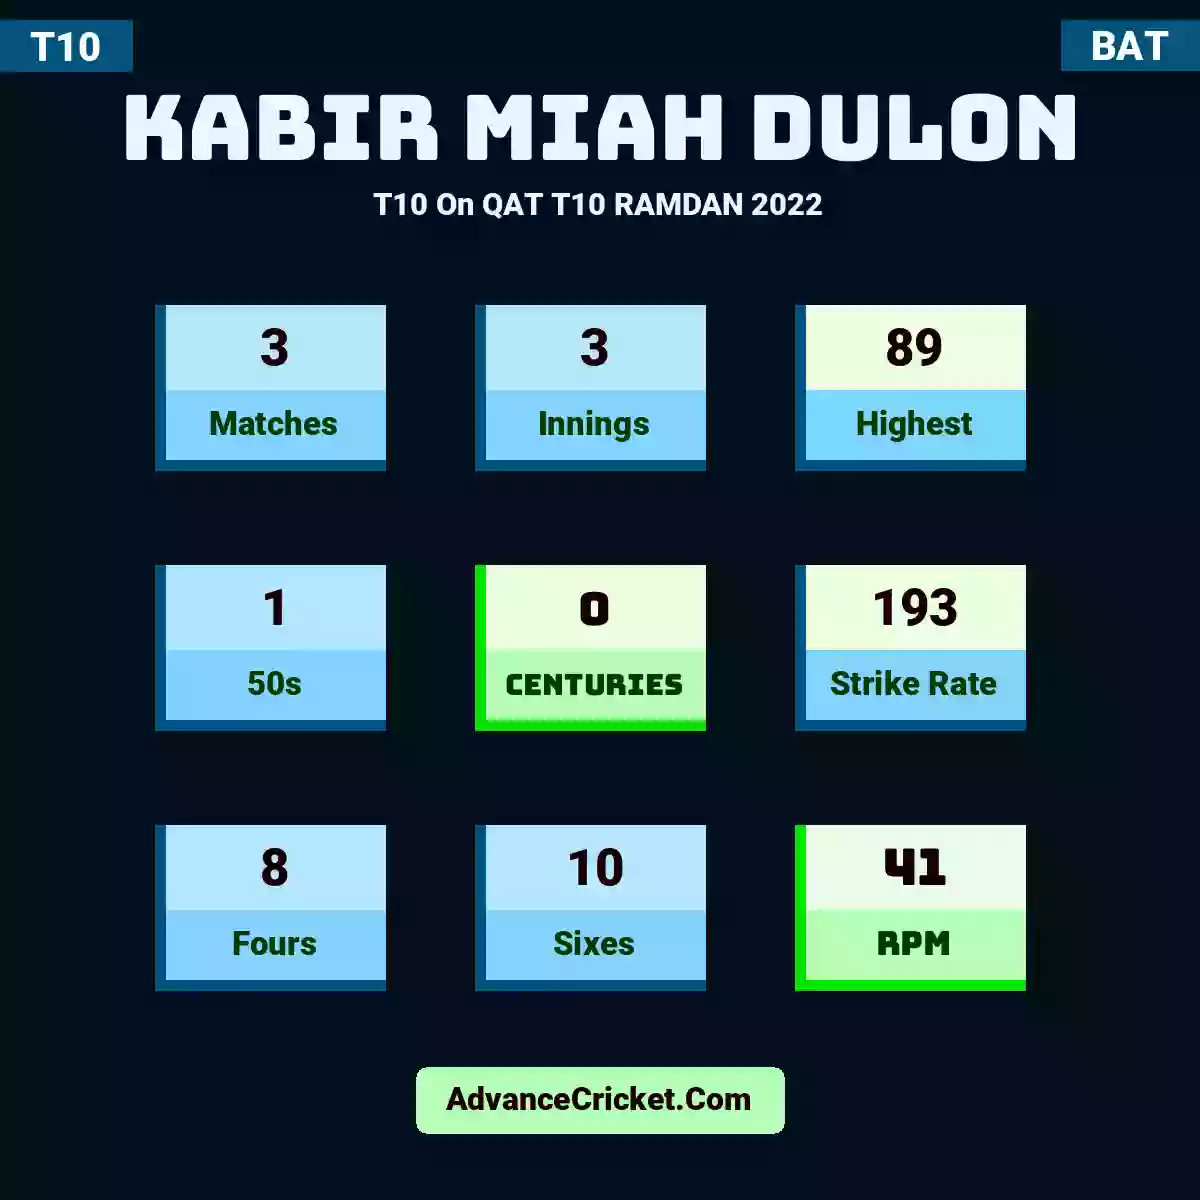 Kabir Miah Dulon T10  On QAT T10 RAMDAN 2022, Kabir Miah Dulon played 3 matches, scored 89 runs as highest, 1 half-centuries, and 0 centuries, with a strike rate of 193. K.Dulon hit 8 fours and 10 sixes, with an RPM of 41.